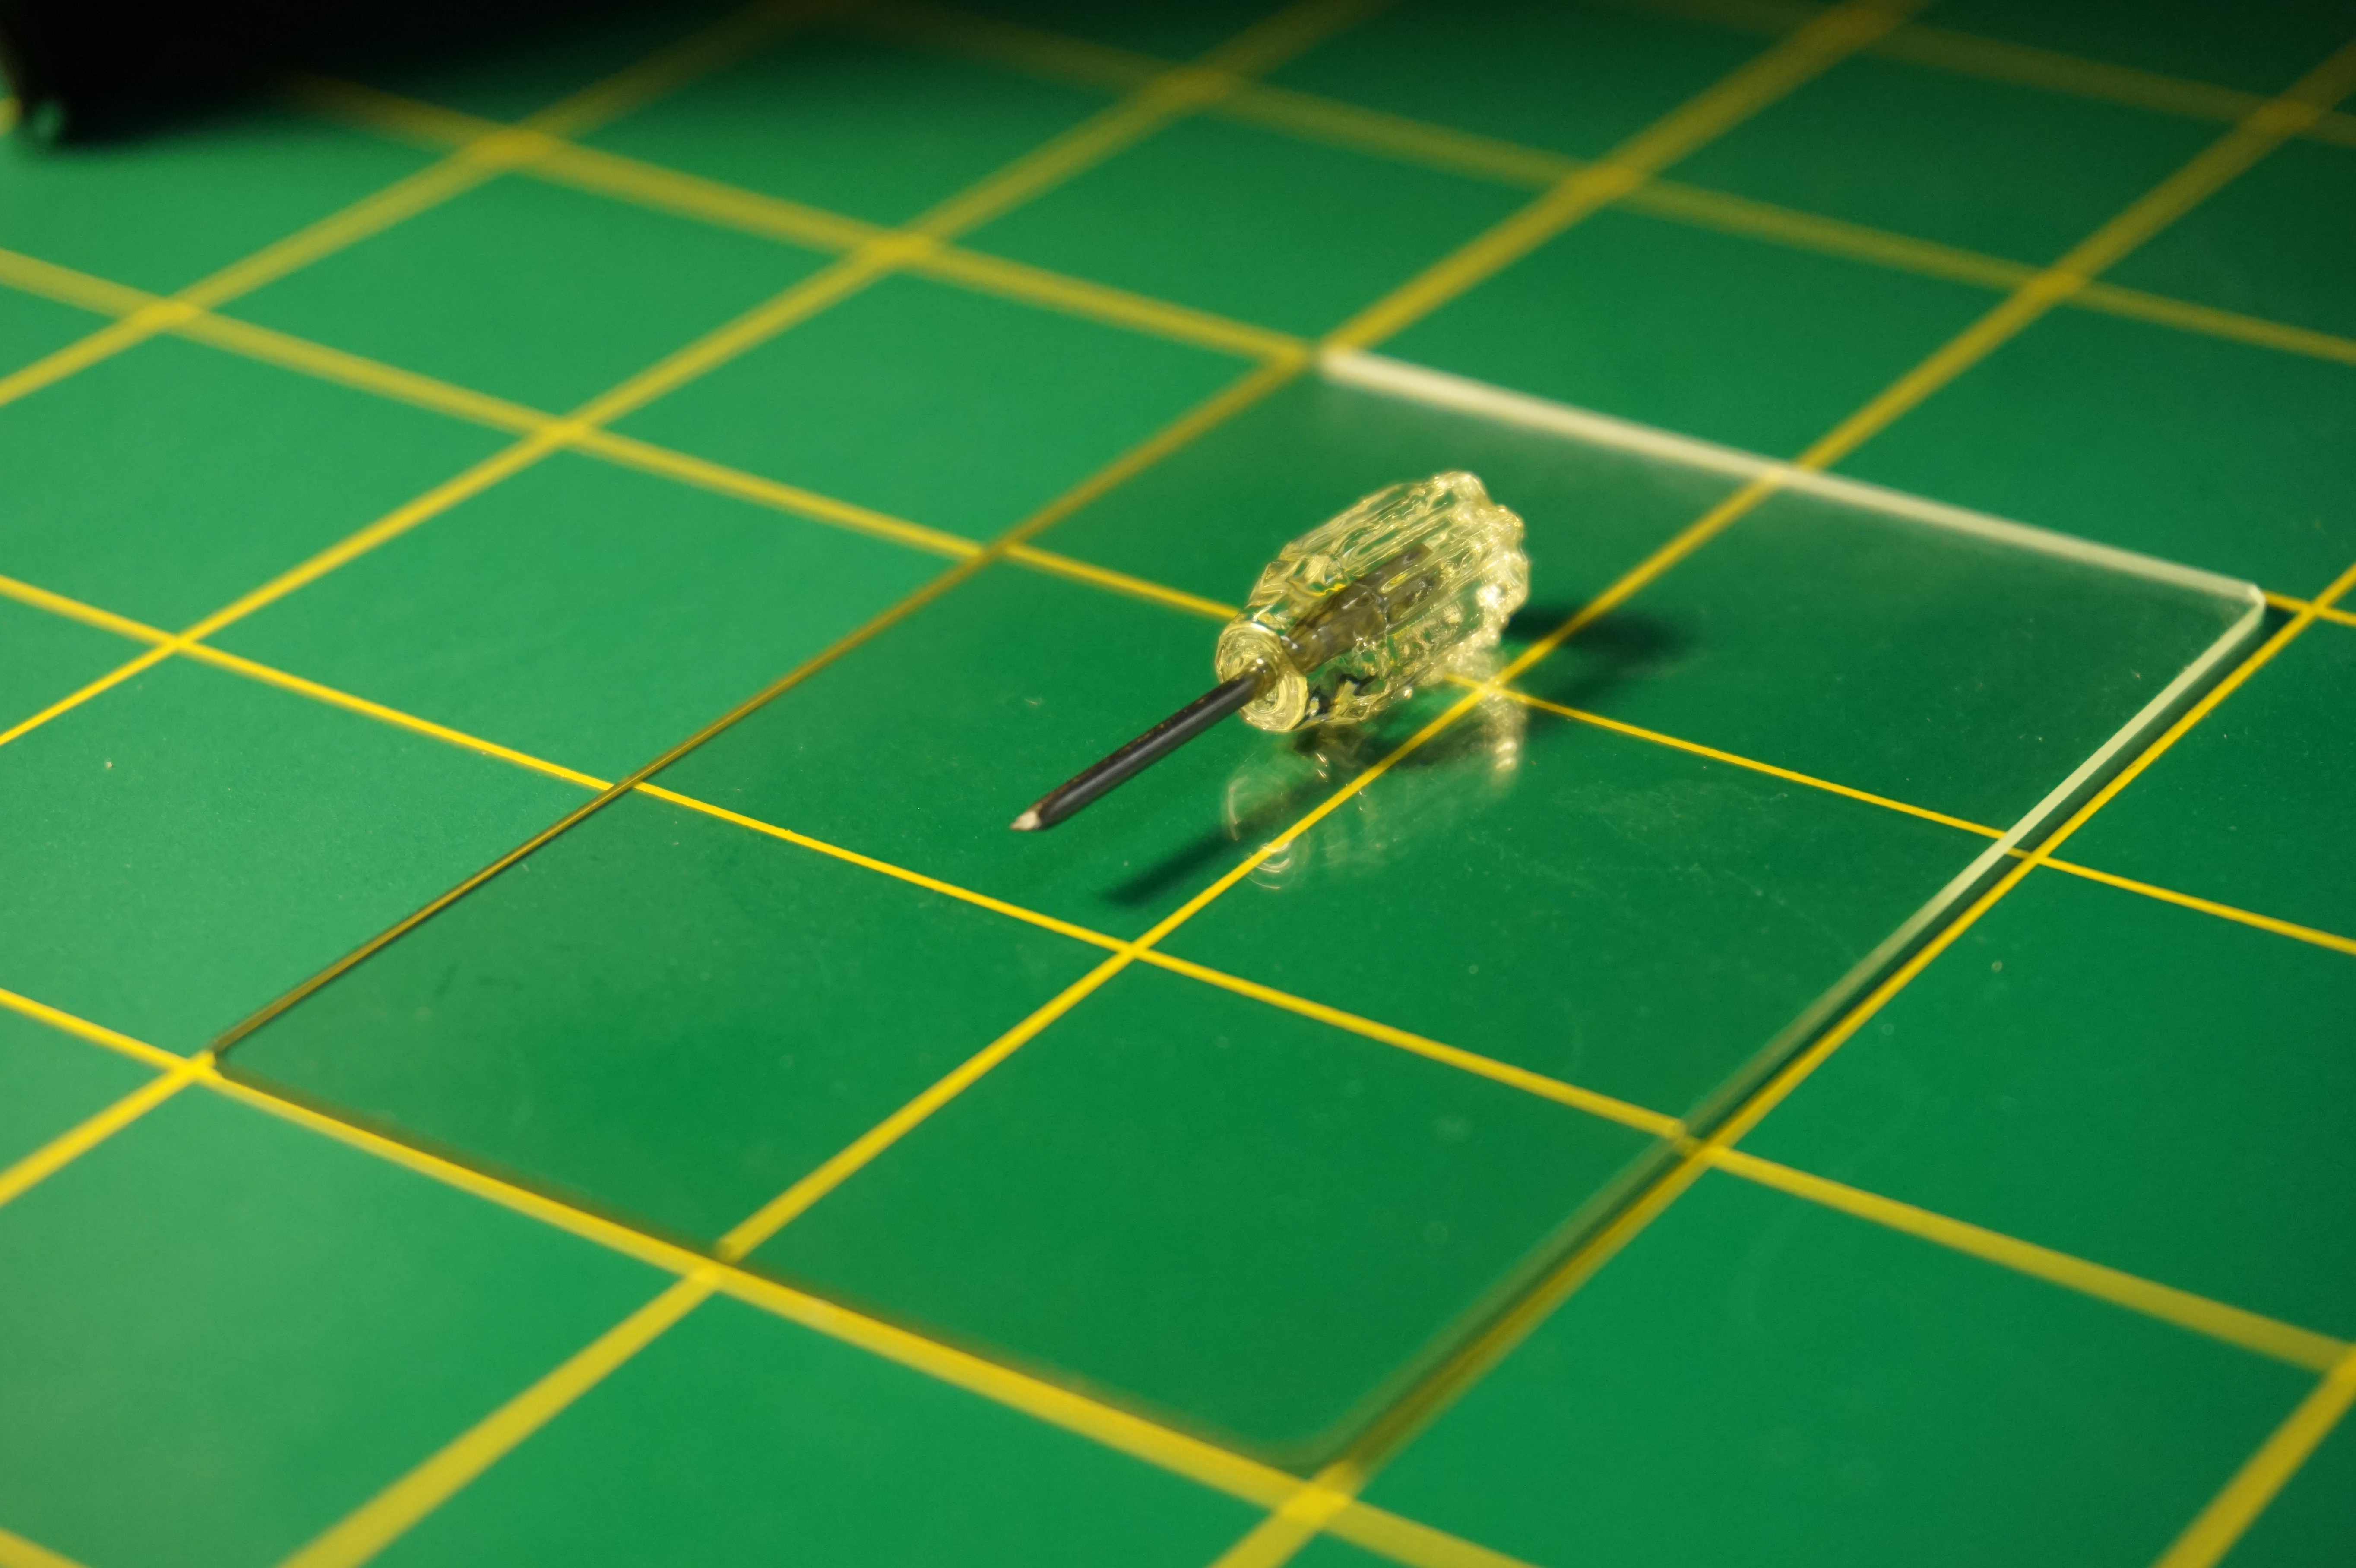 The replicator 3D printed a handle onto a screwdriver shaft. Photo by Stephen McNally/UC Berkeley.